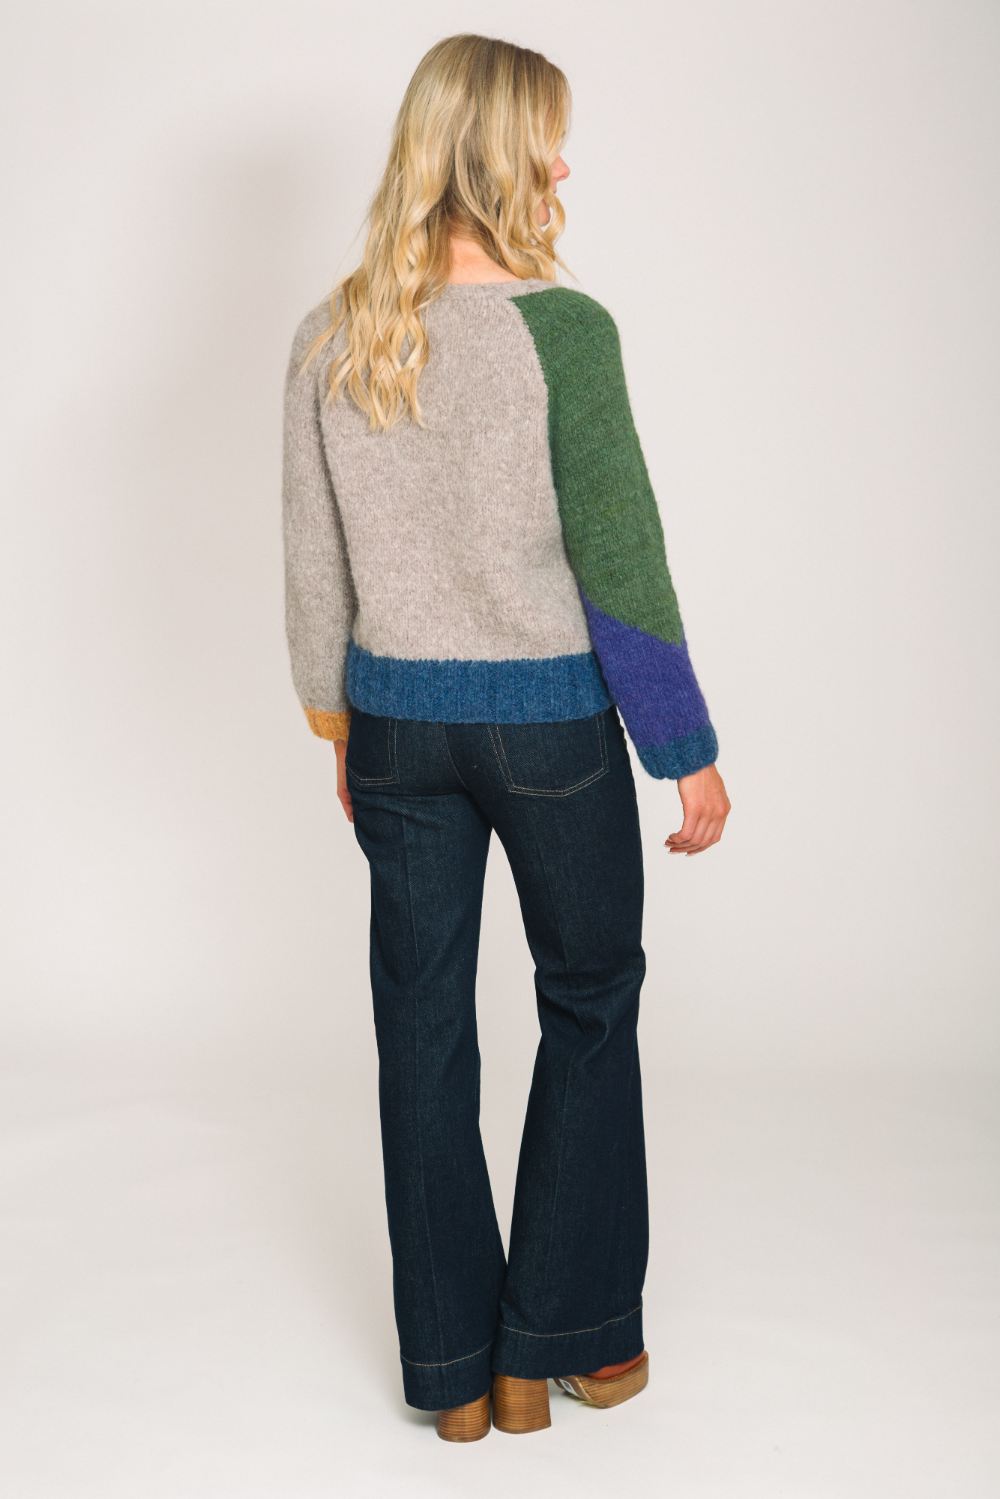 abstract design alpaca jumper sweater amano